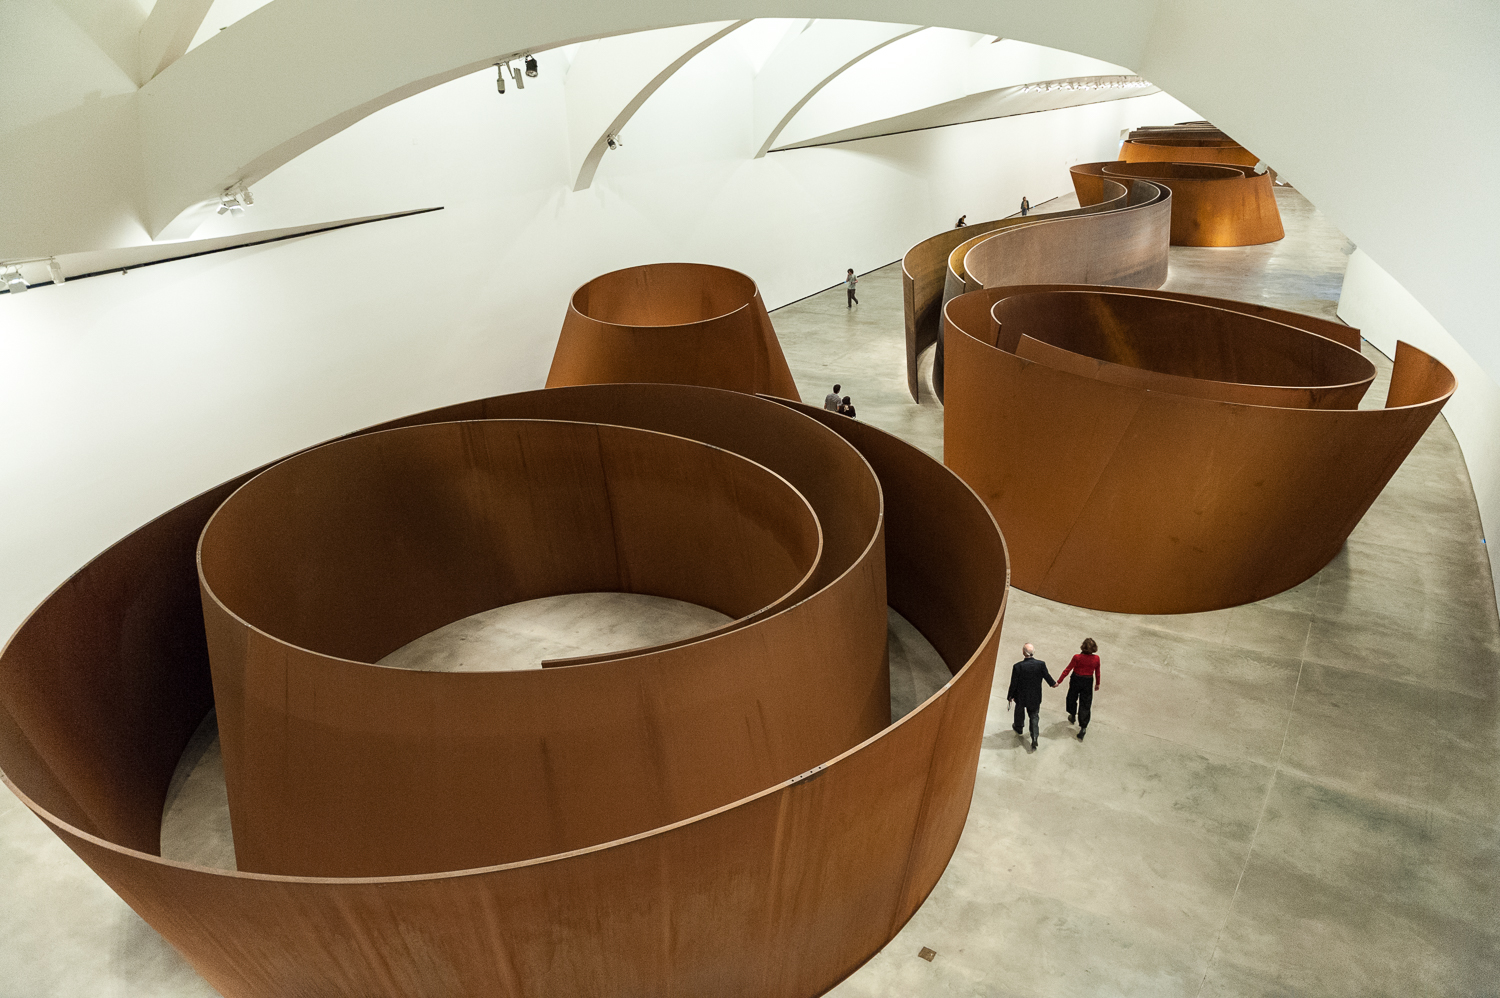 Exposition of Richard Serras' works inside Guggenheim museum, Bilbao, Spain.